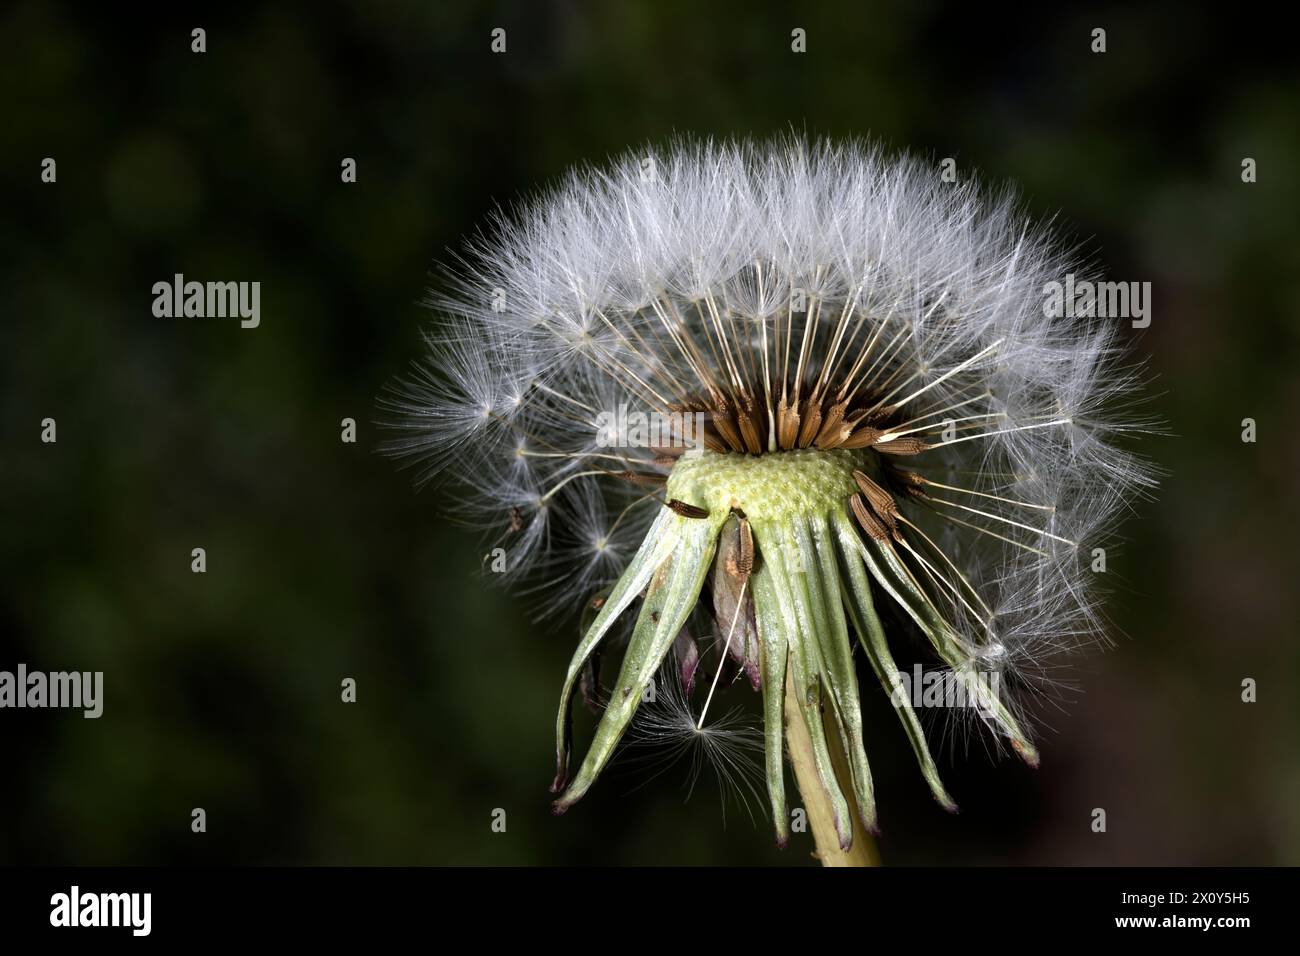 Dandelion Clock Seed Head Wind Dispersal Stock Photo